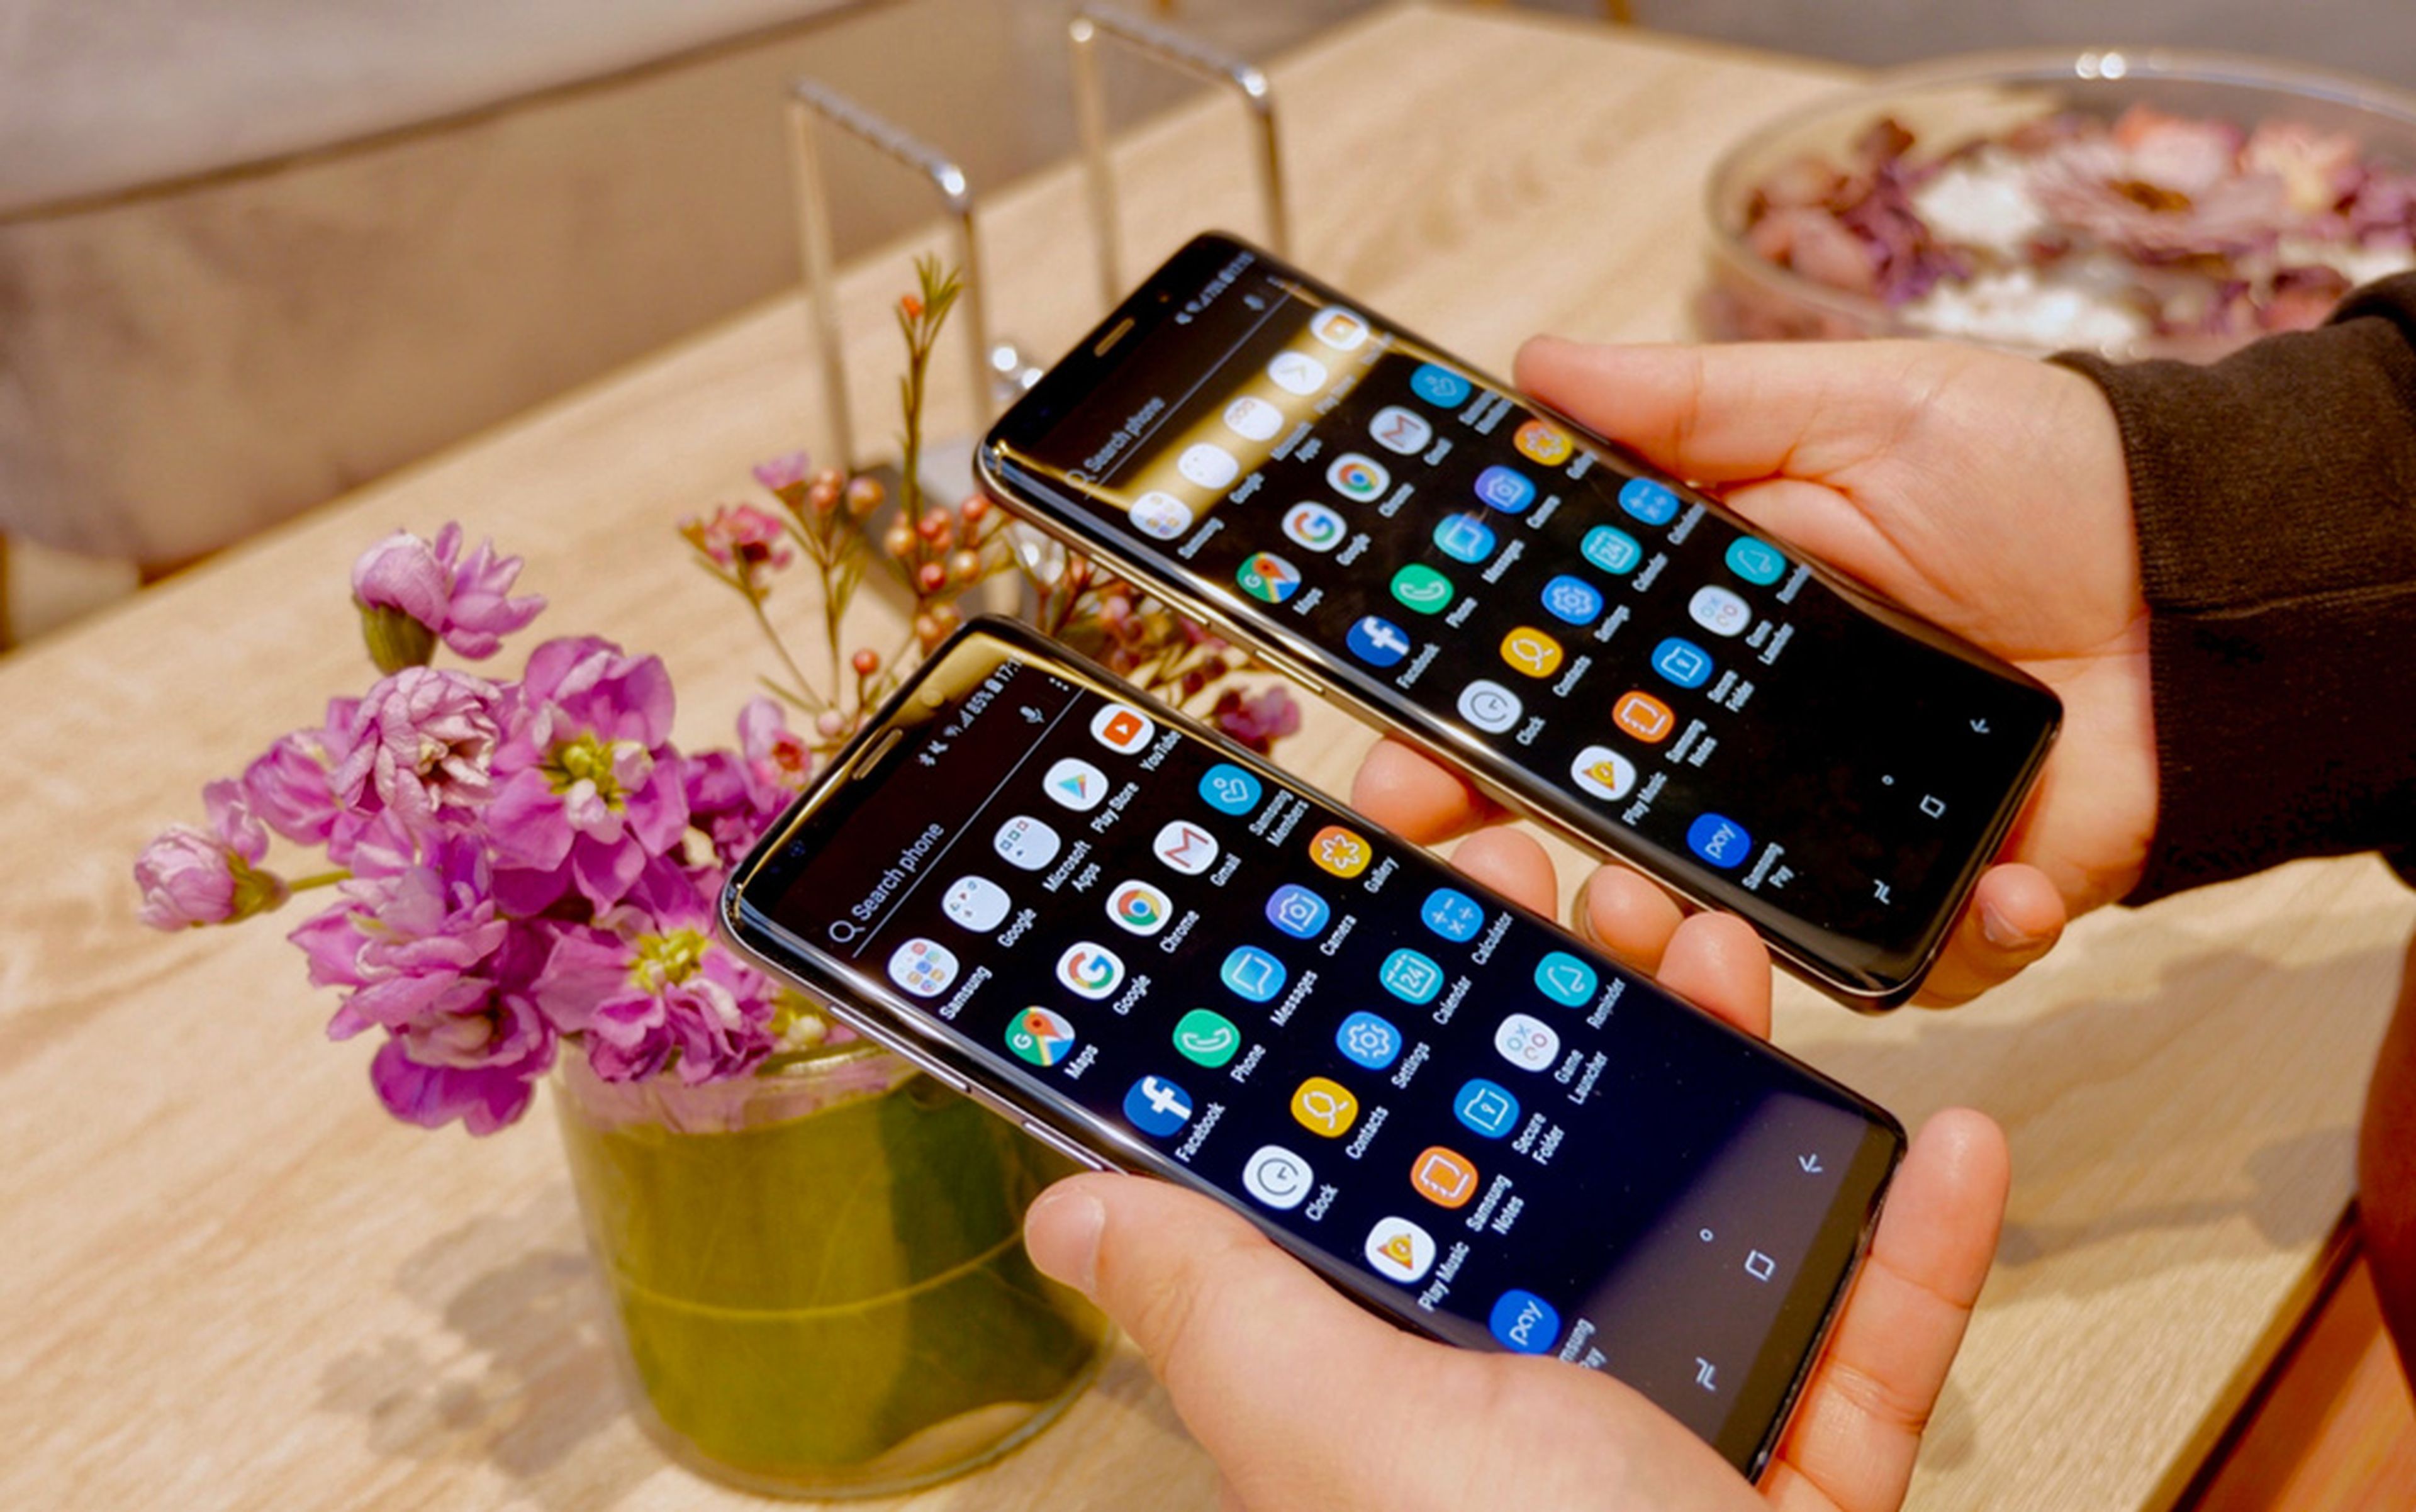 Samsung Galaxy S9 y S9 Plus